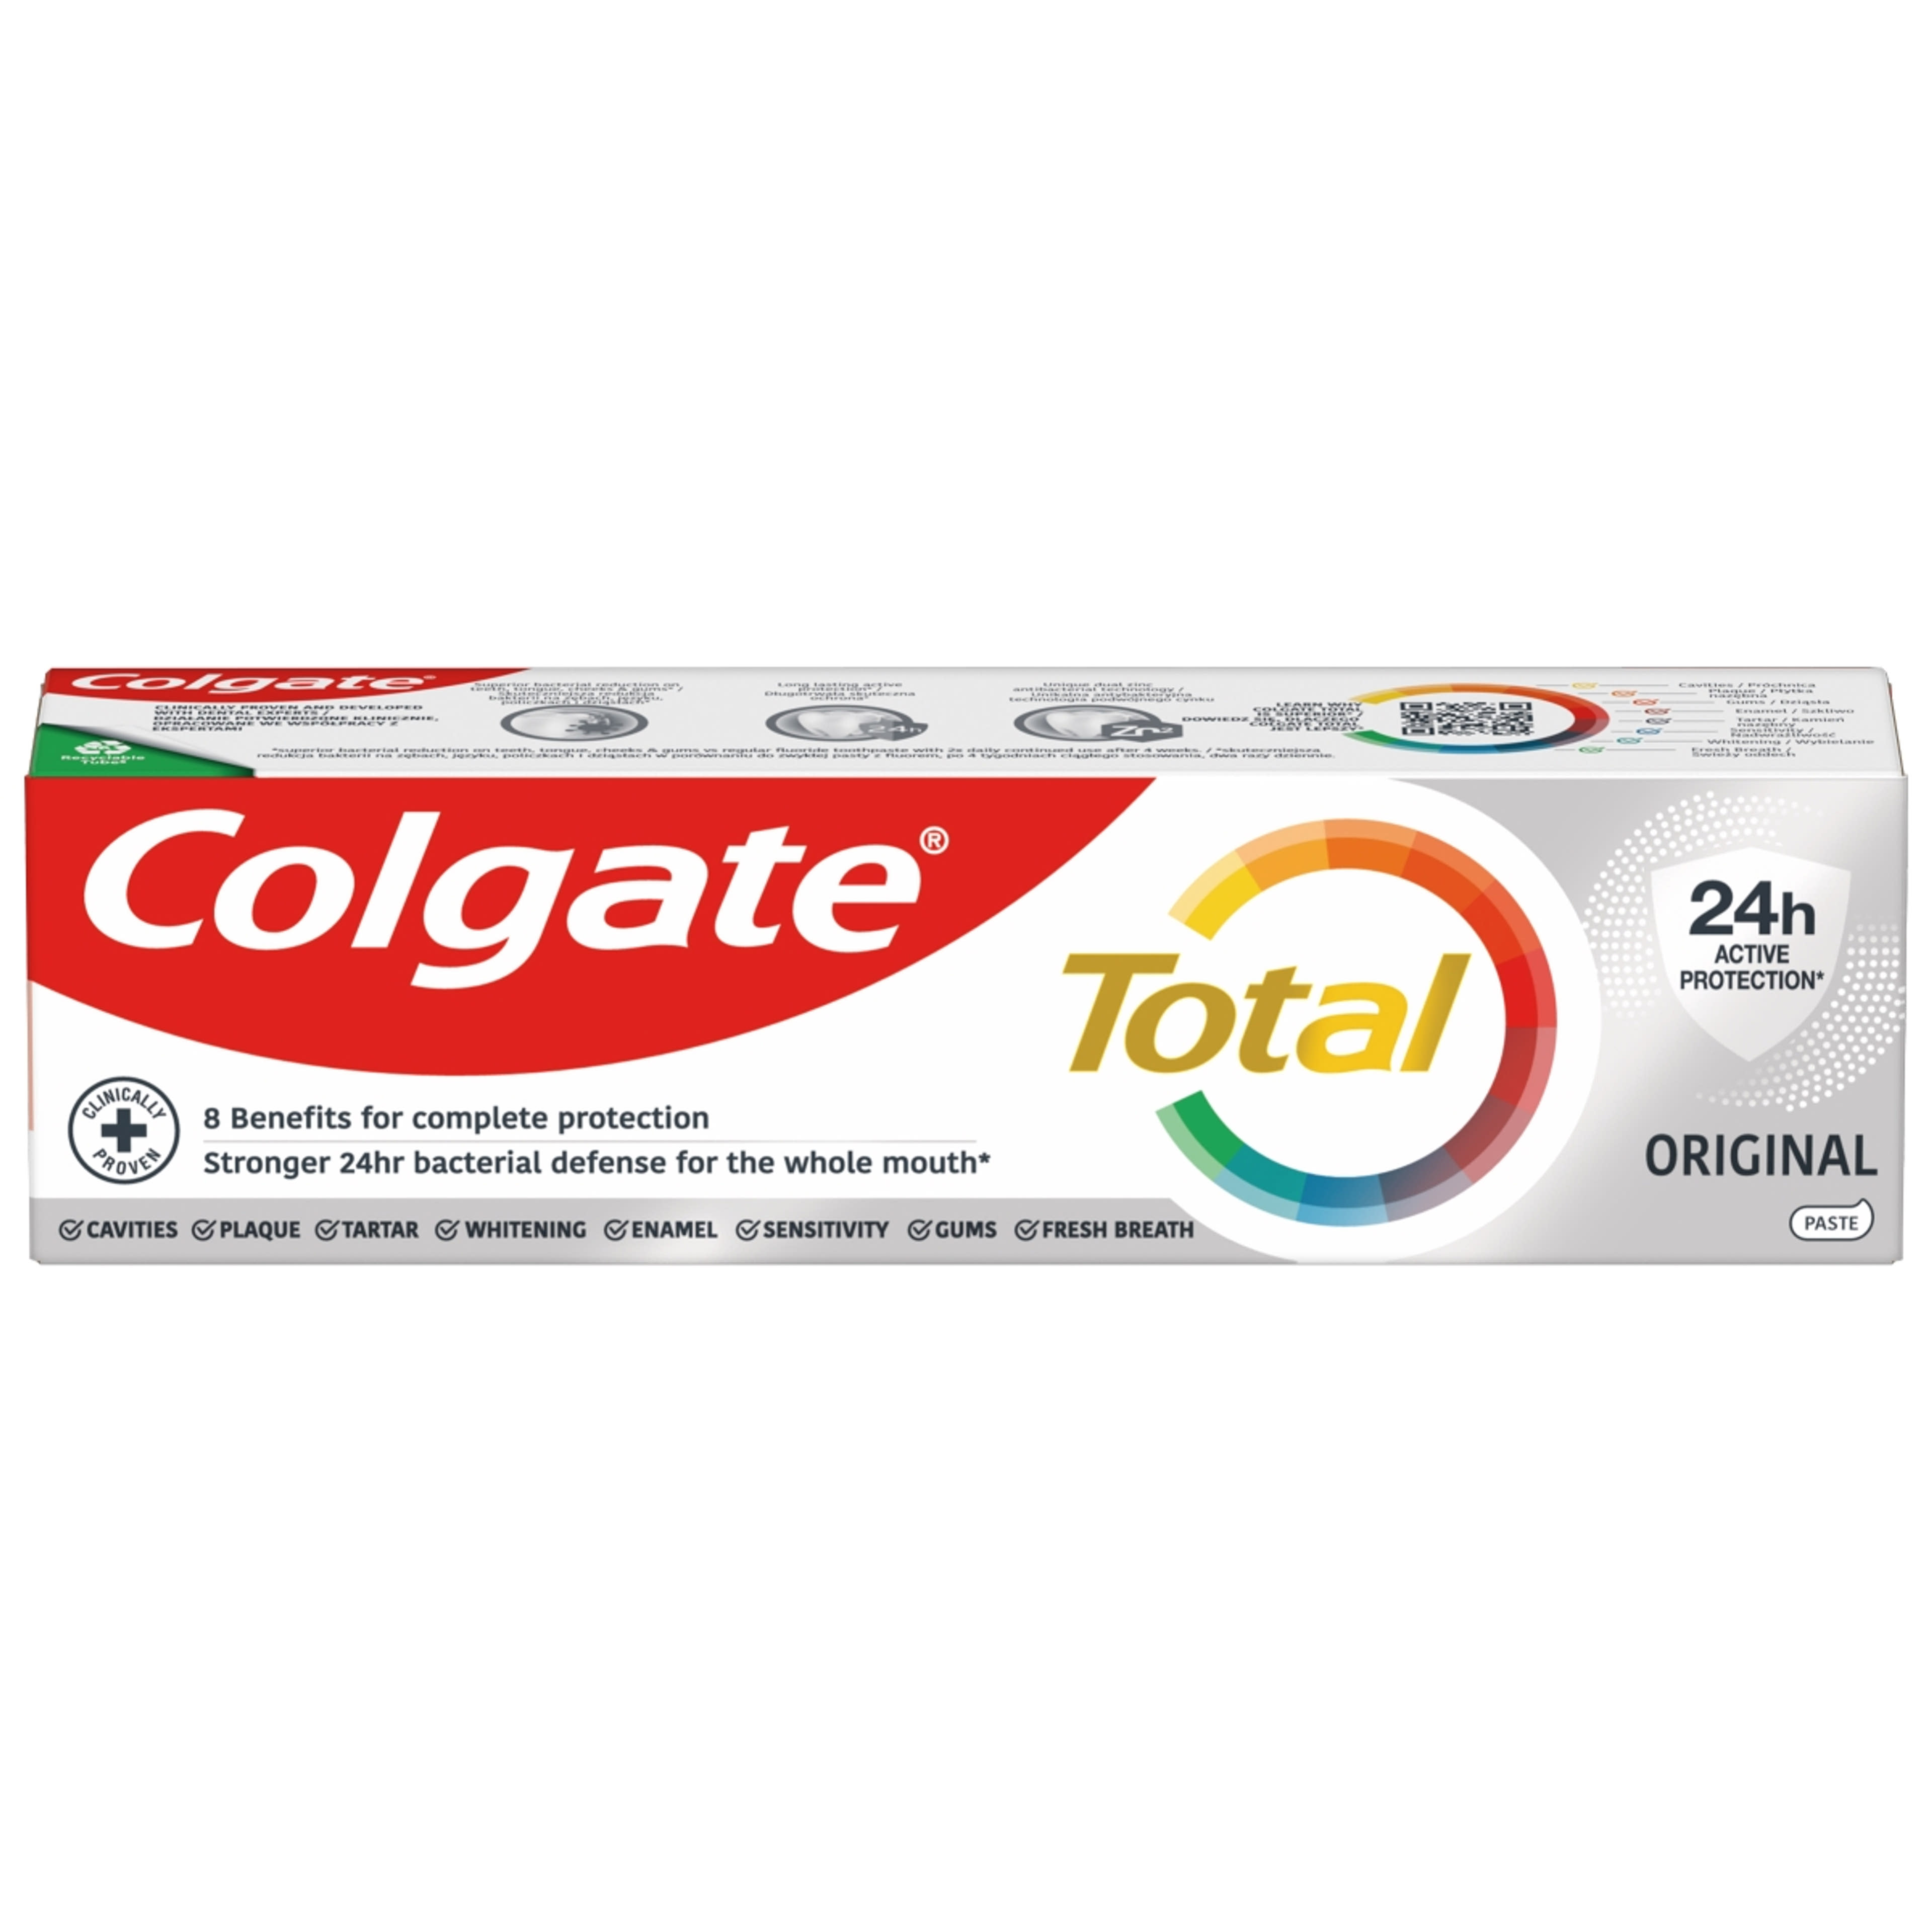 Colgate Total Original fogkrém - 75 ml-1